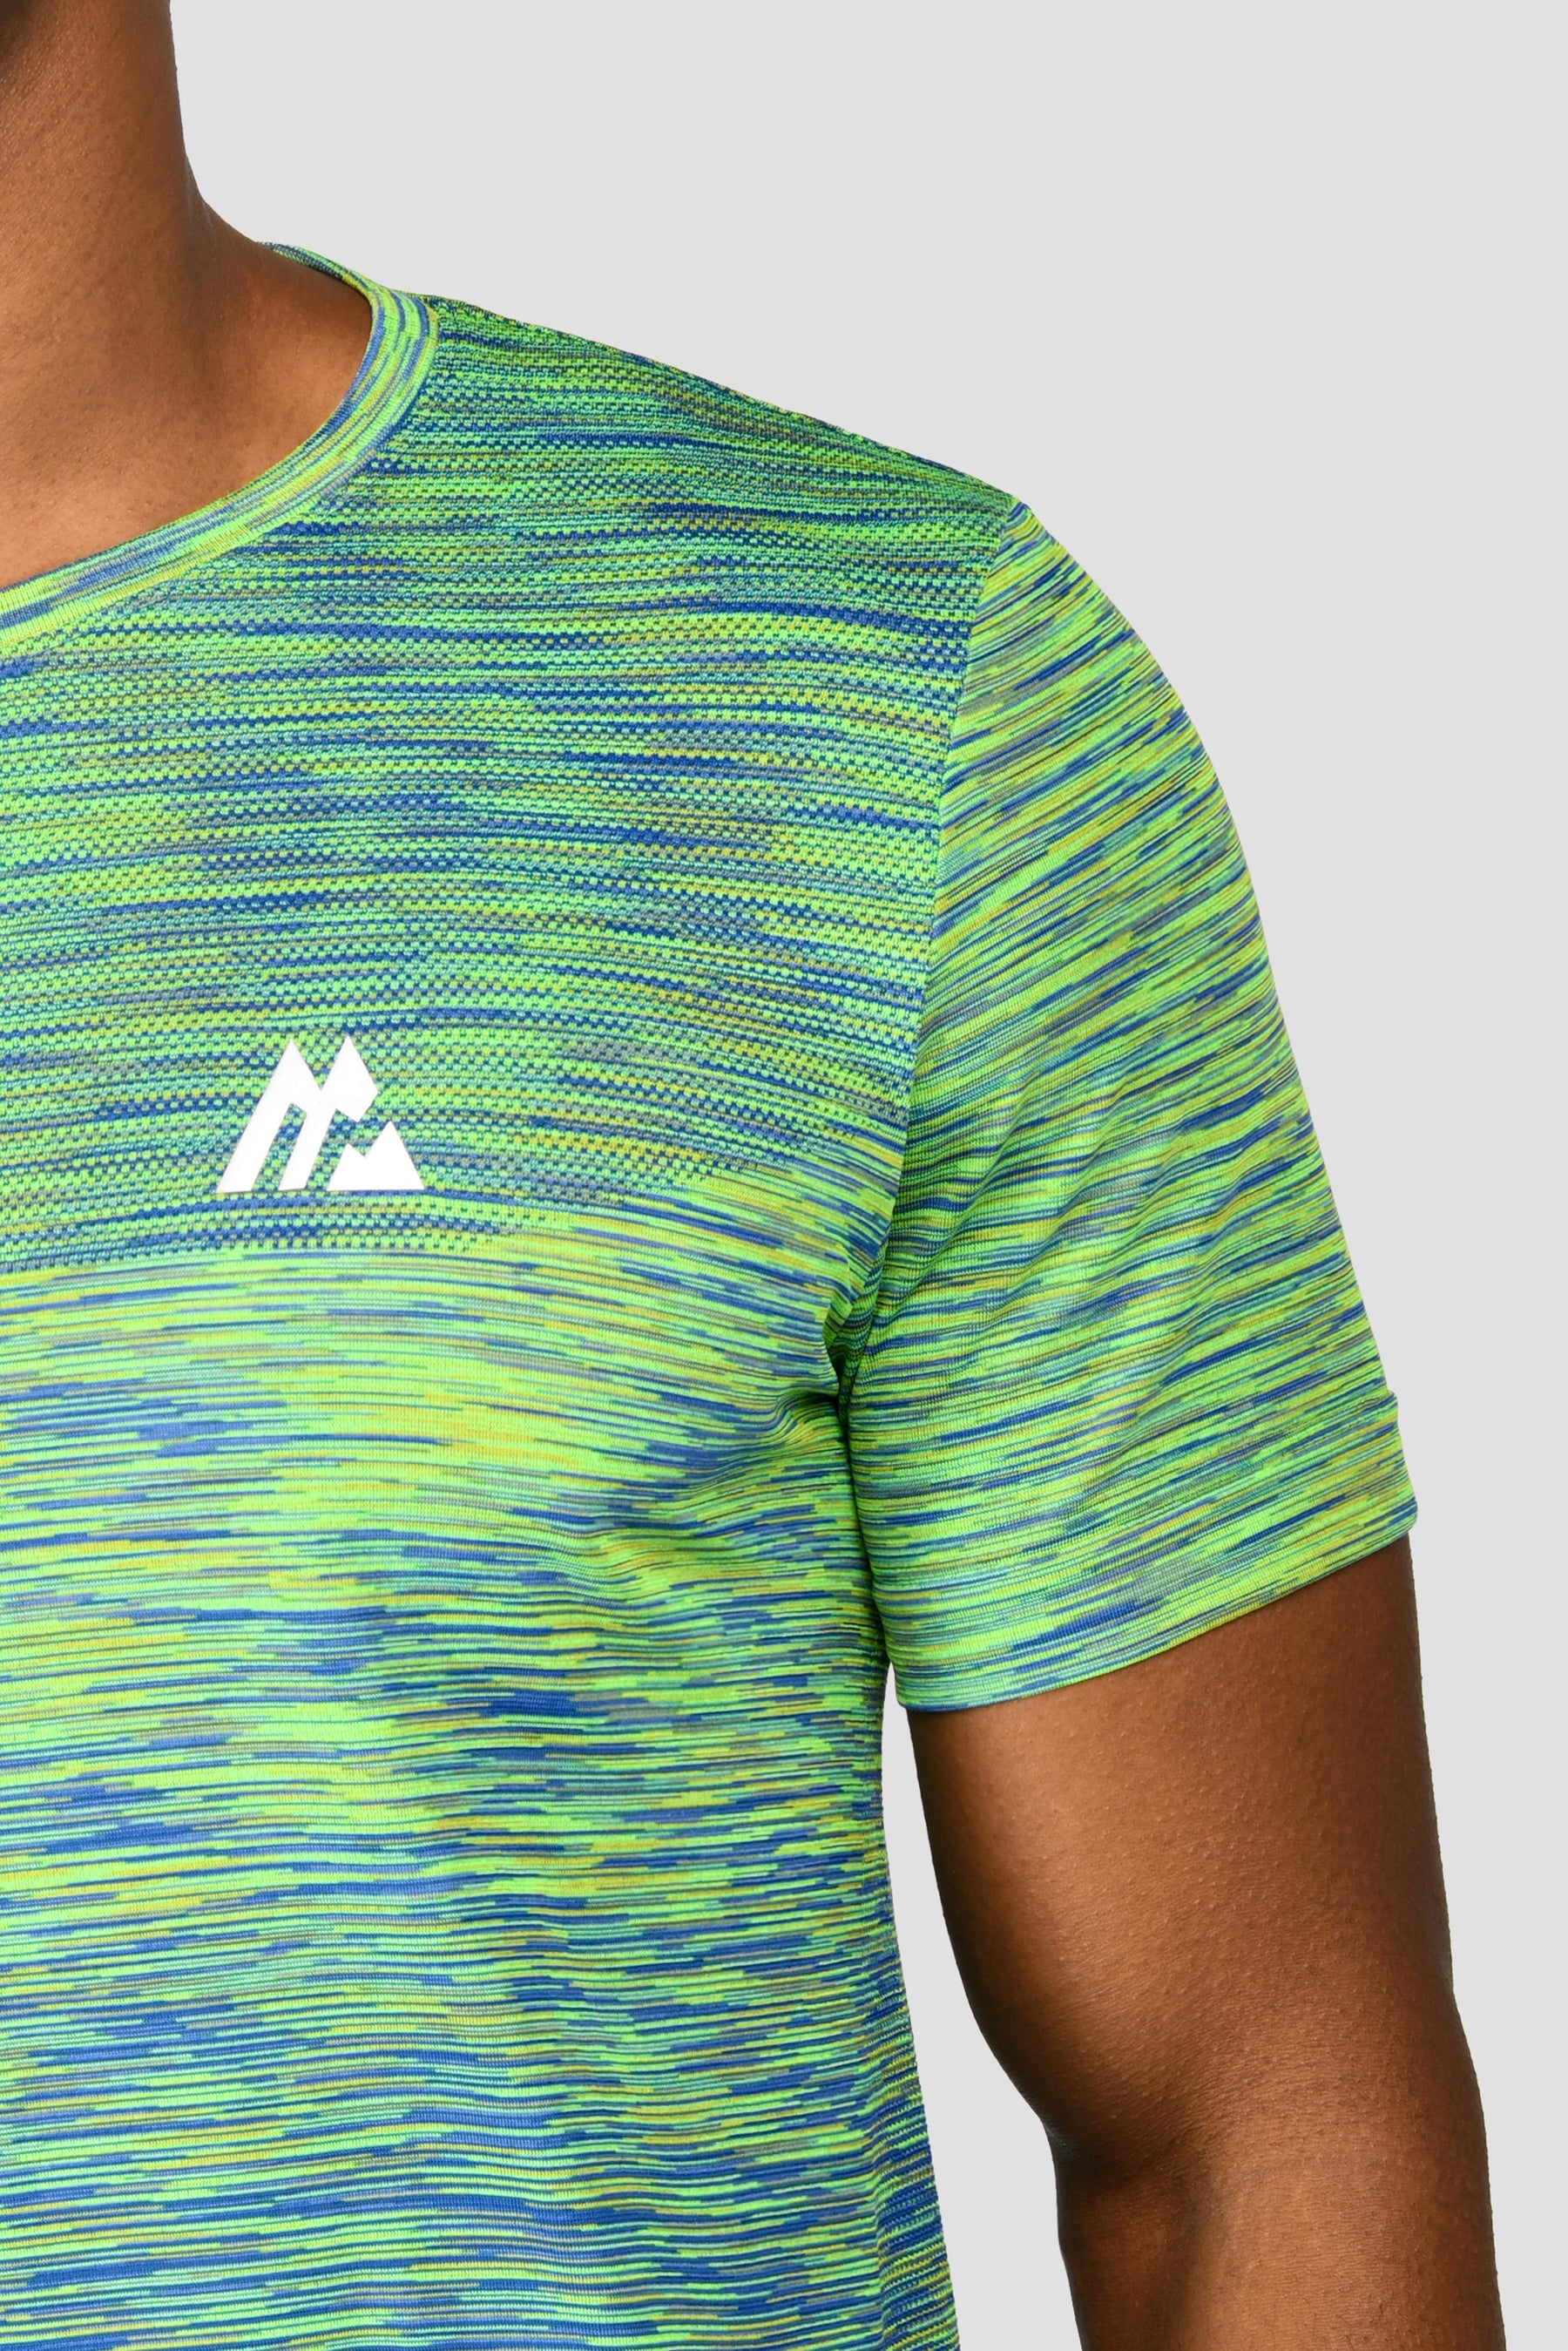 Men's Trail Seamless T-Shirt - OG Neon/Cobalt Blue